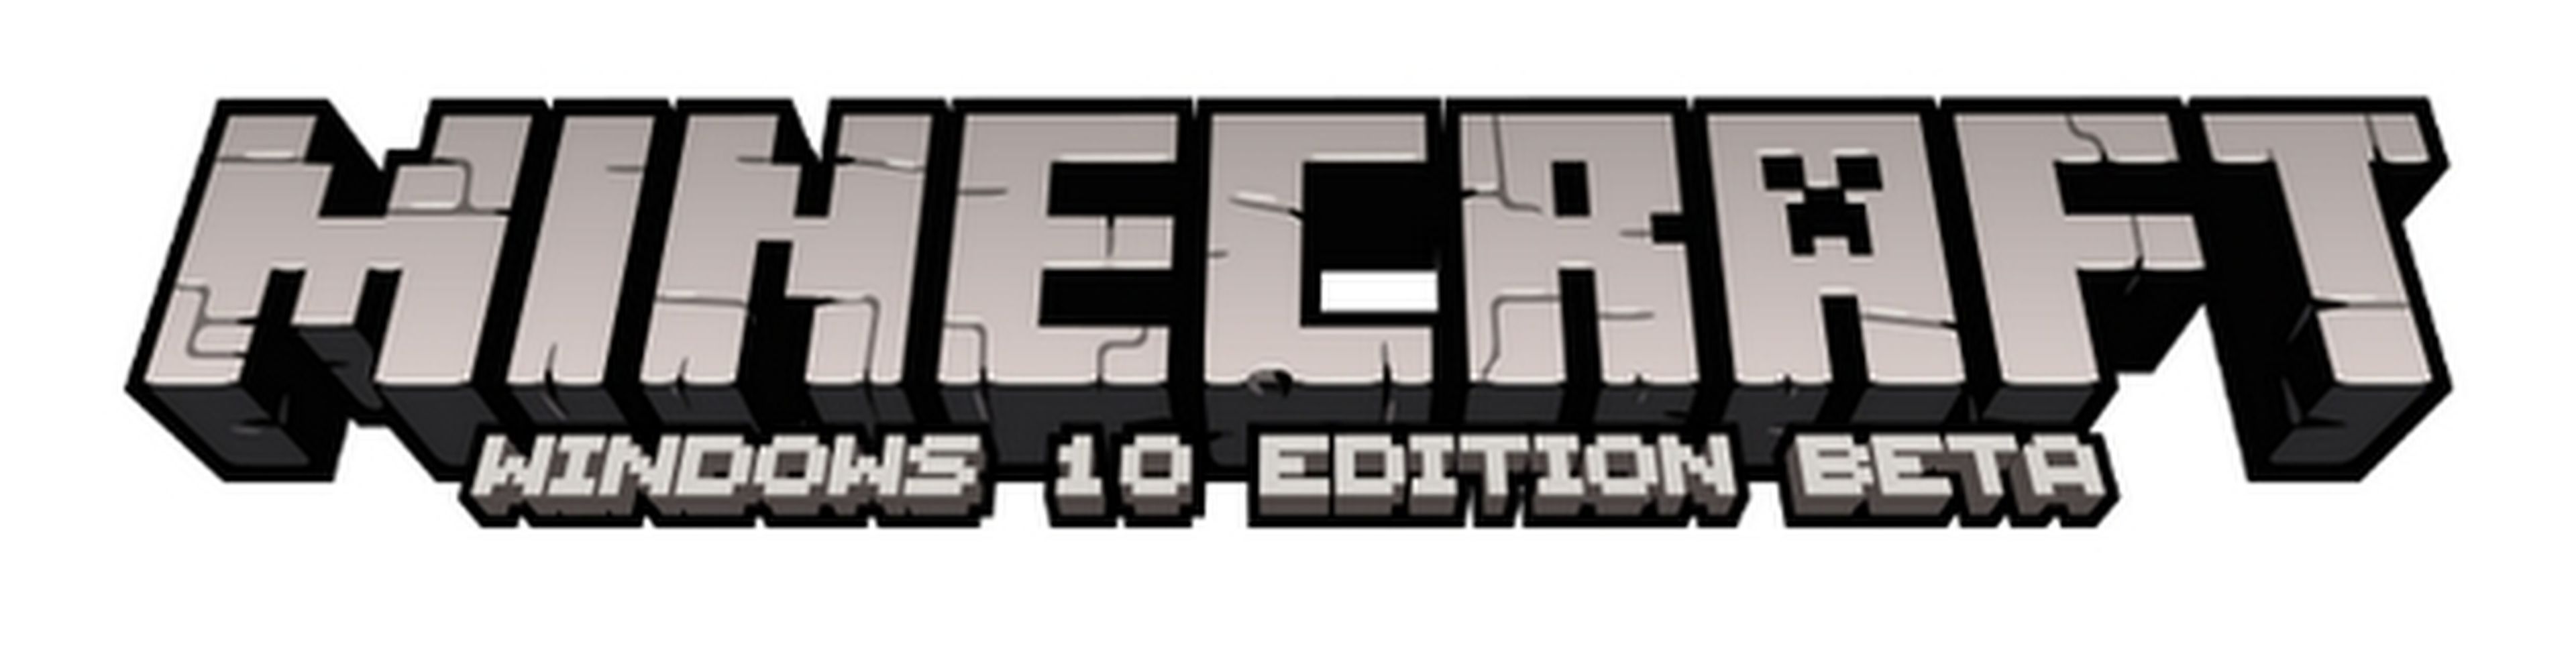 Minecraft Windows 10 Edition beta